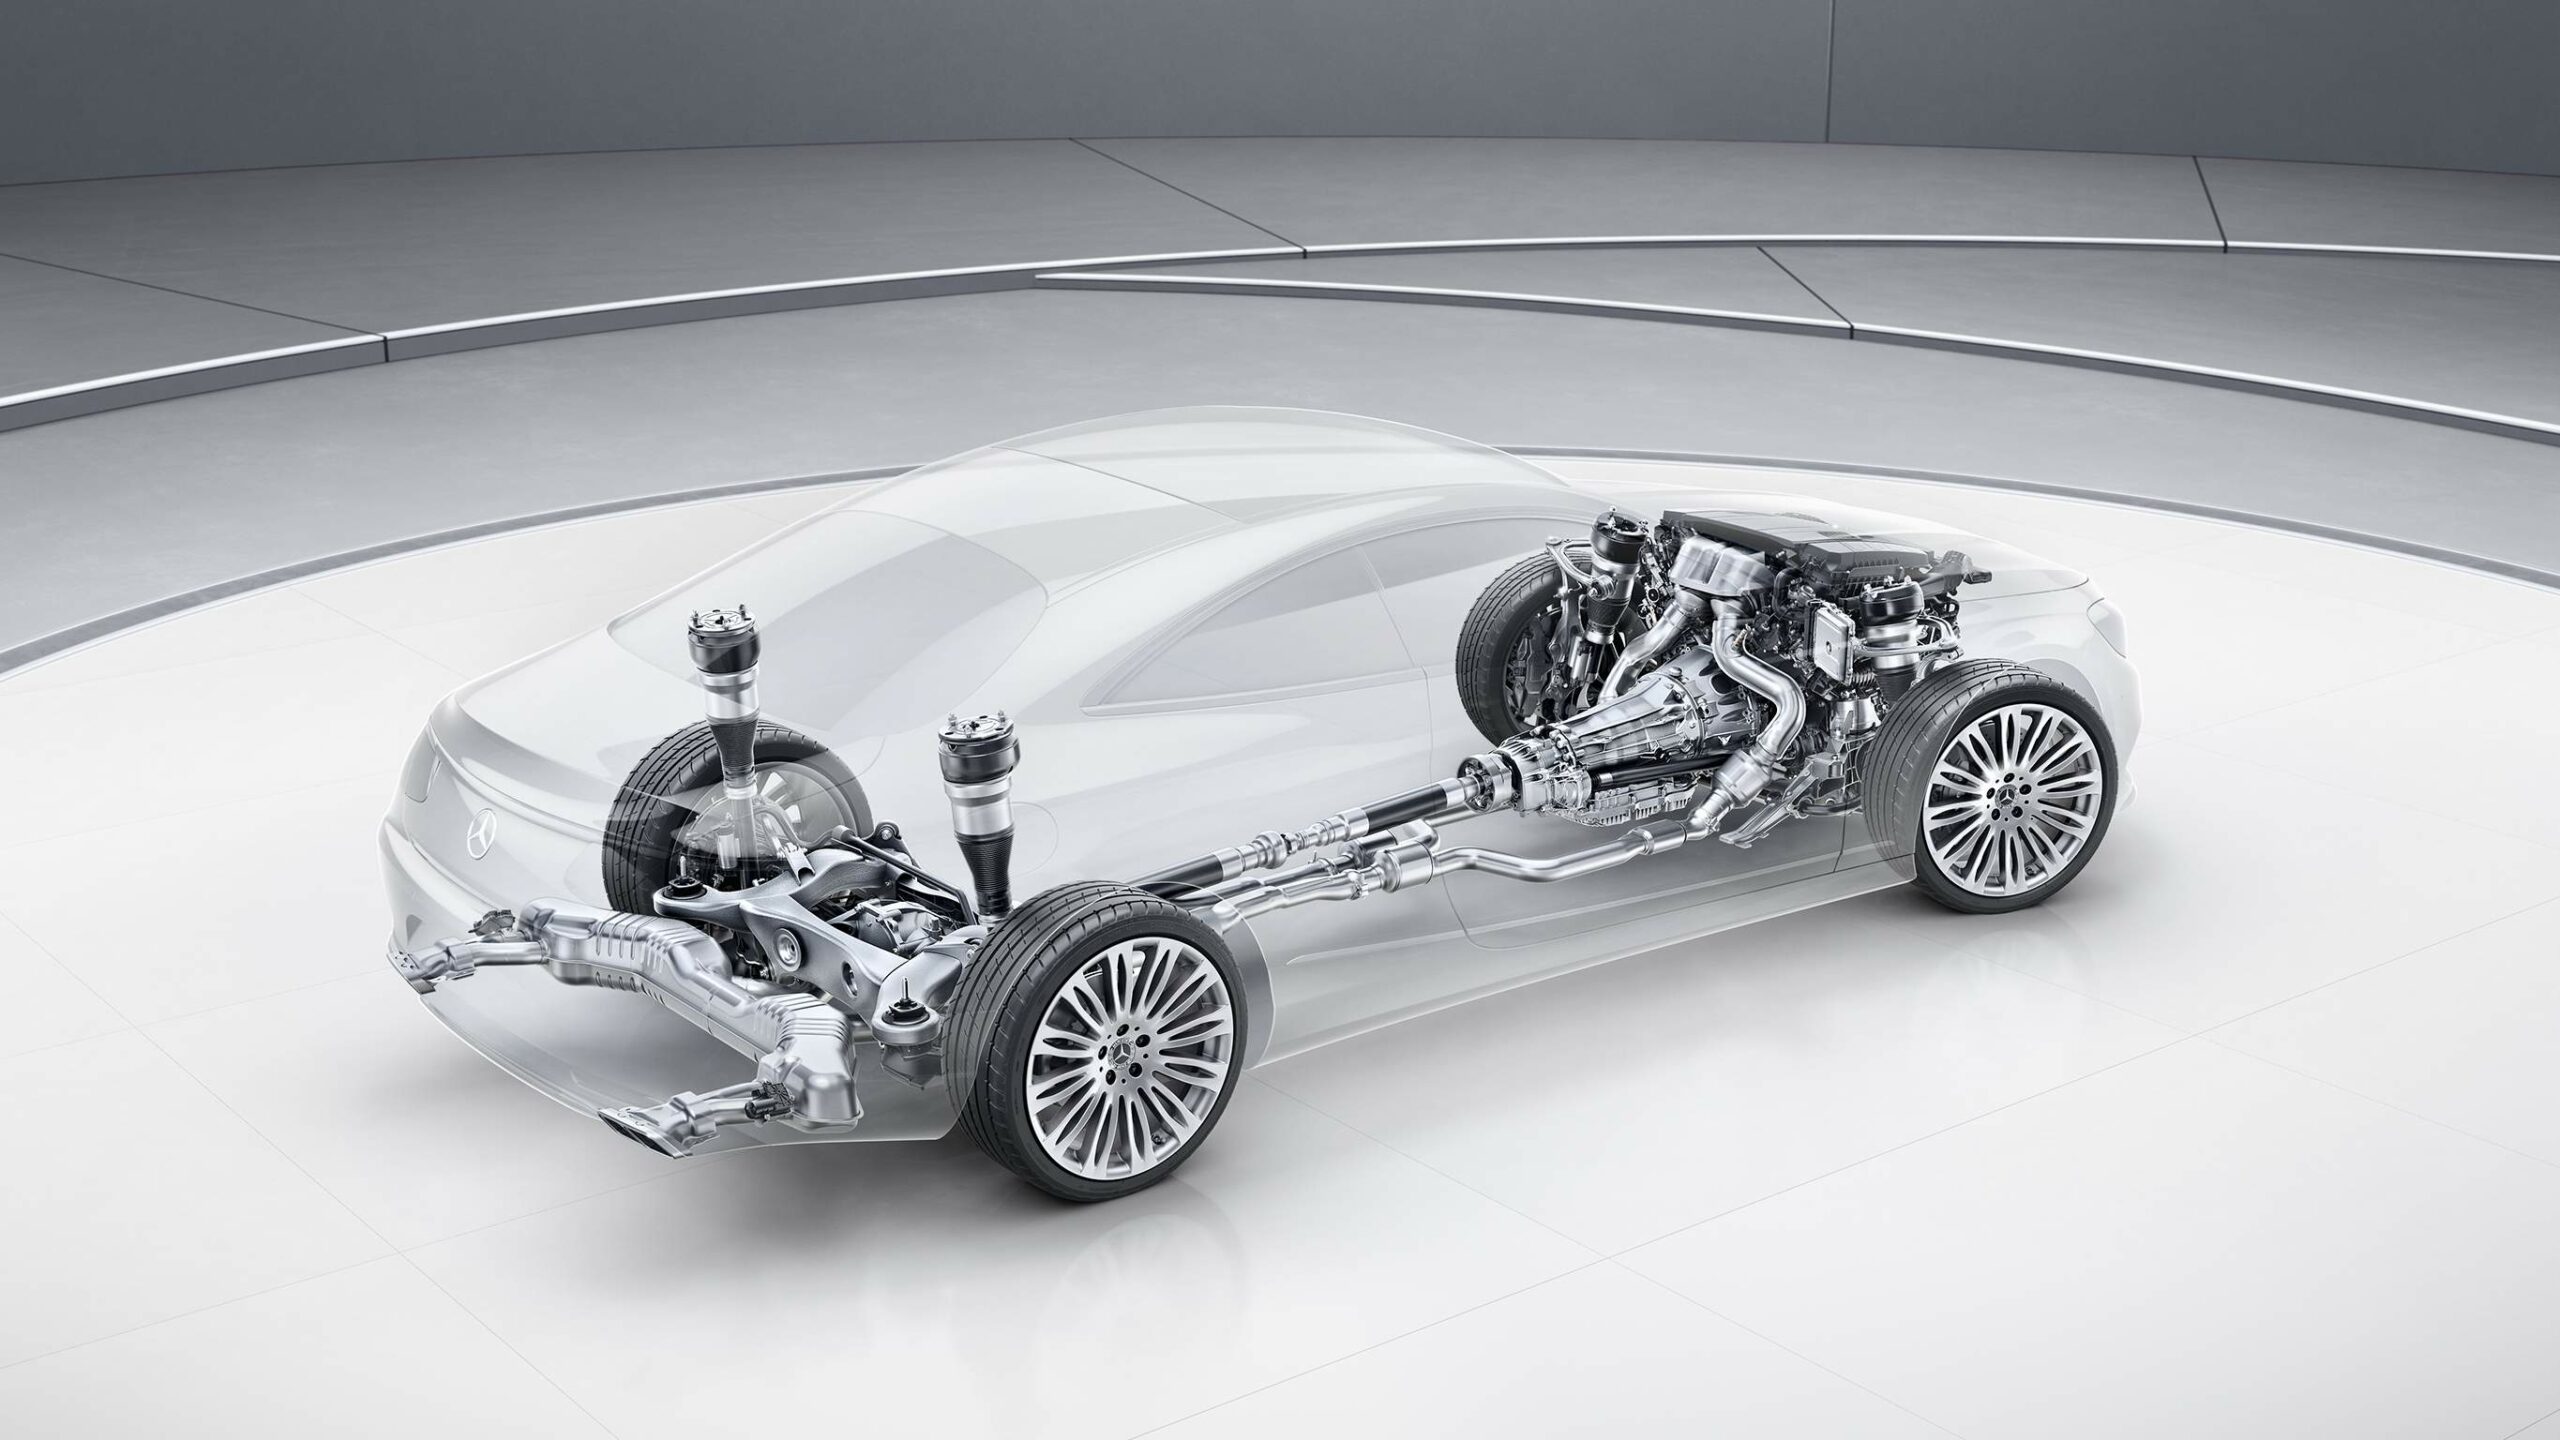 Chasis altamente deportivo dentro de la Clase S Coupe de Mercedes-Benz